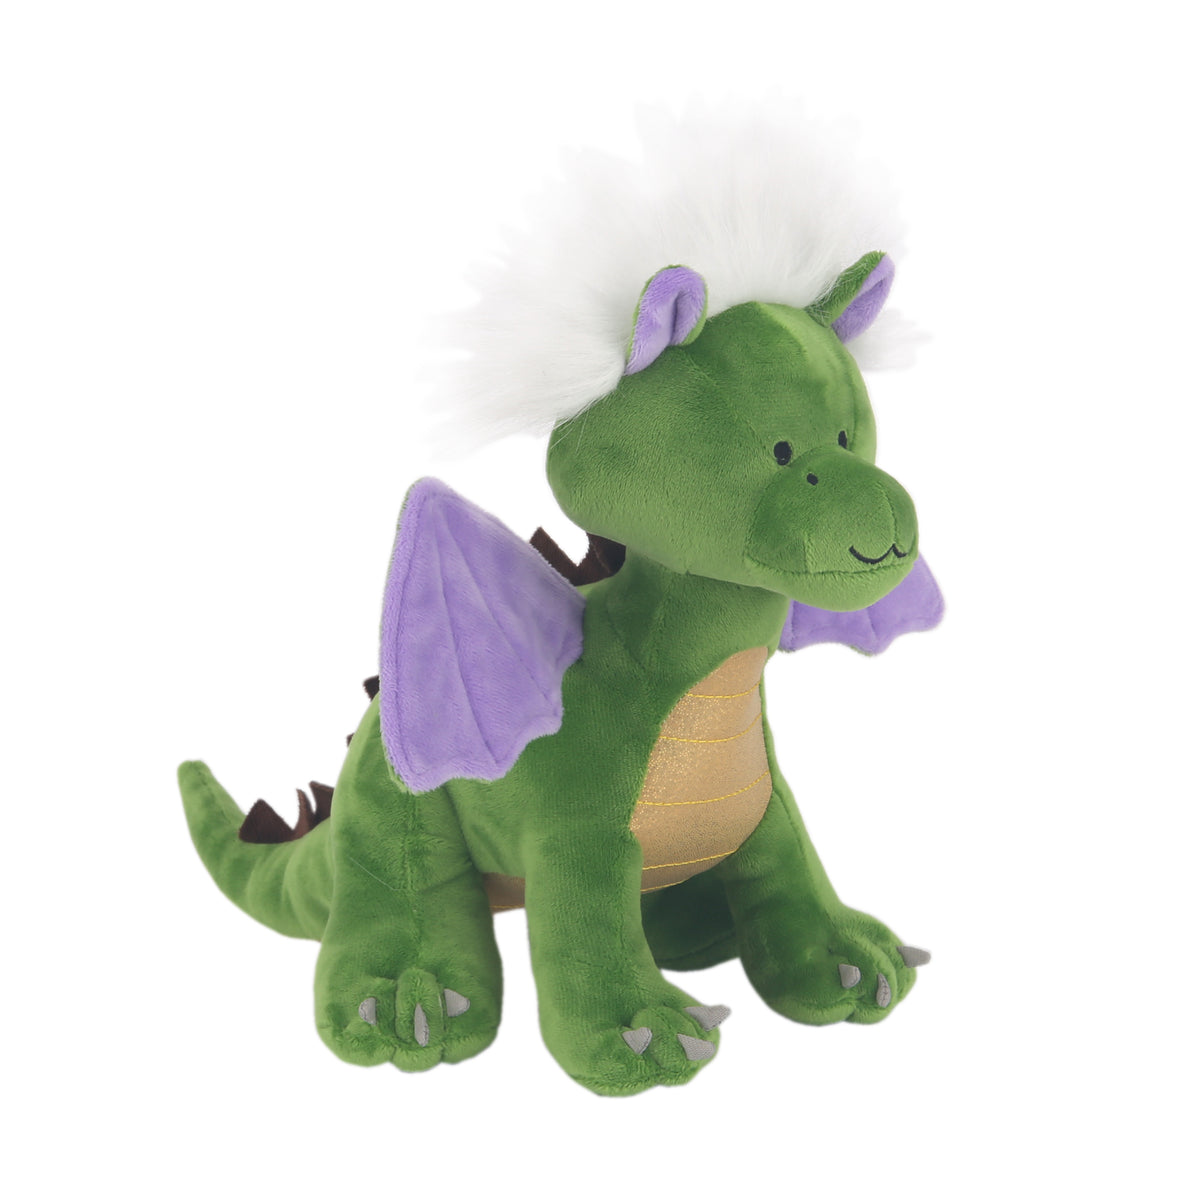 purple stuffed dragon